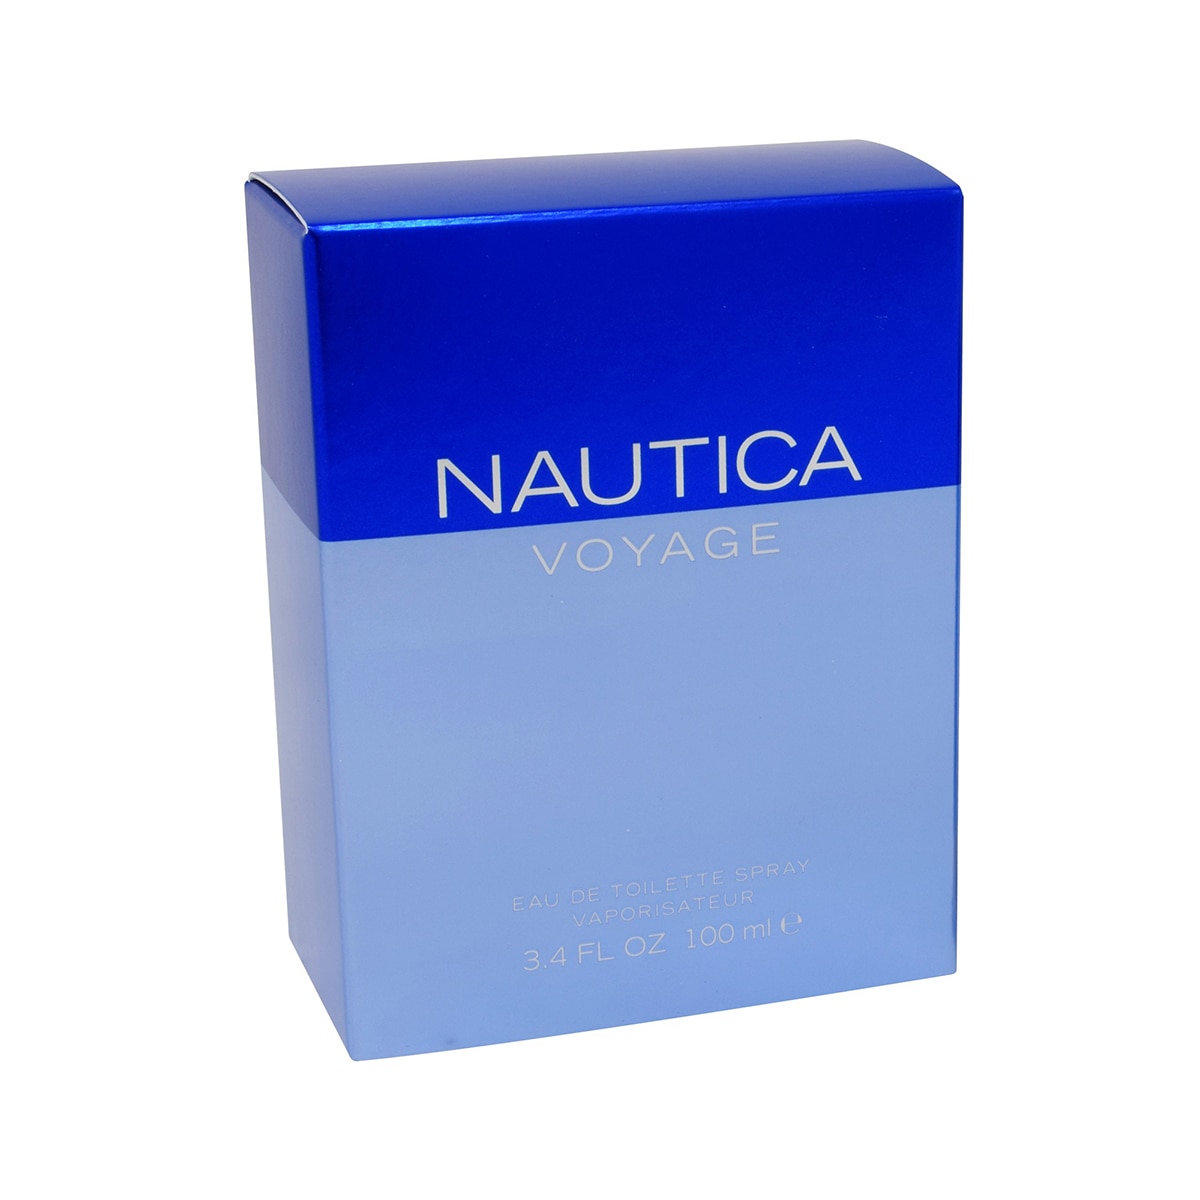 Nautica Voyage 100 ml